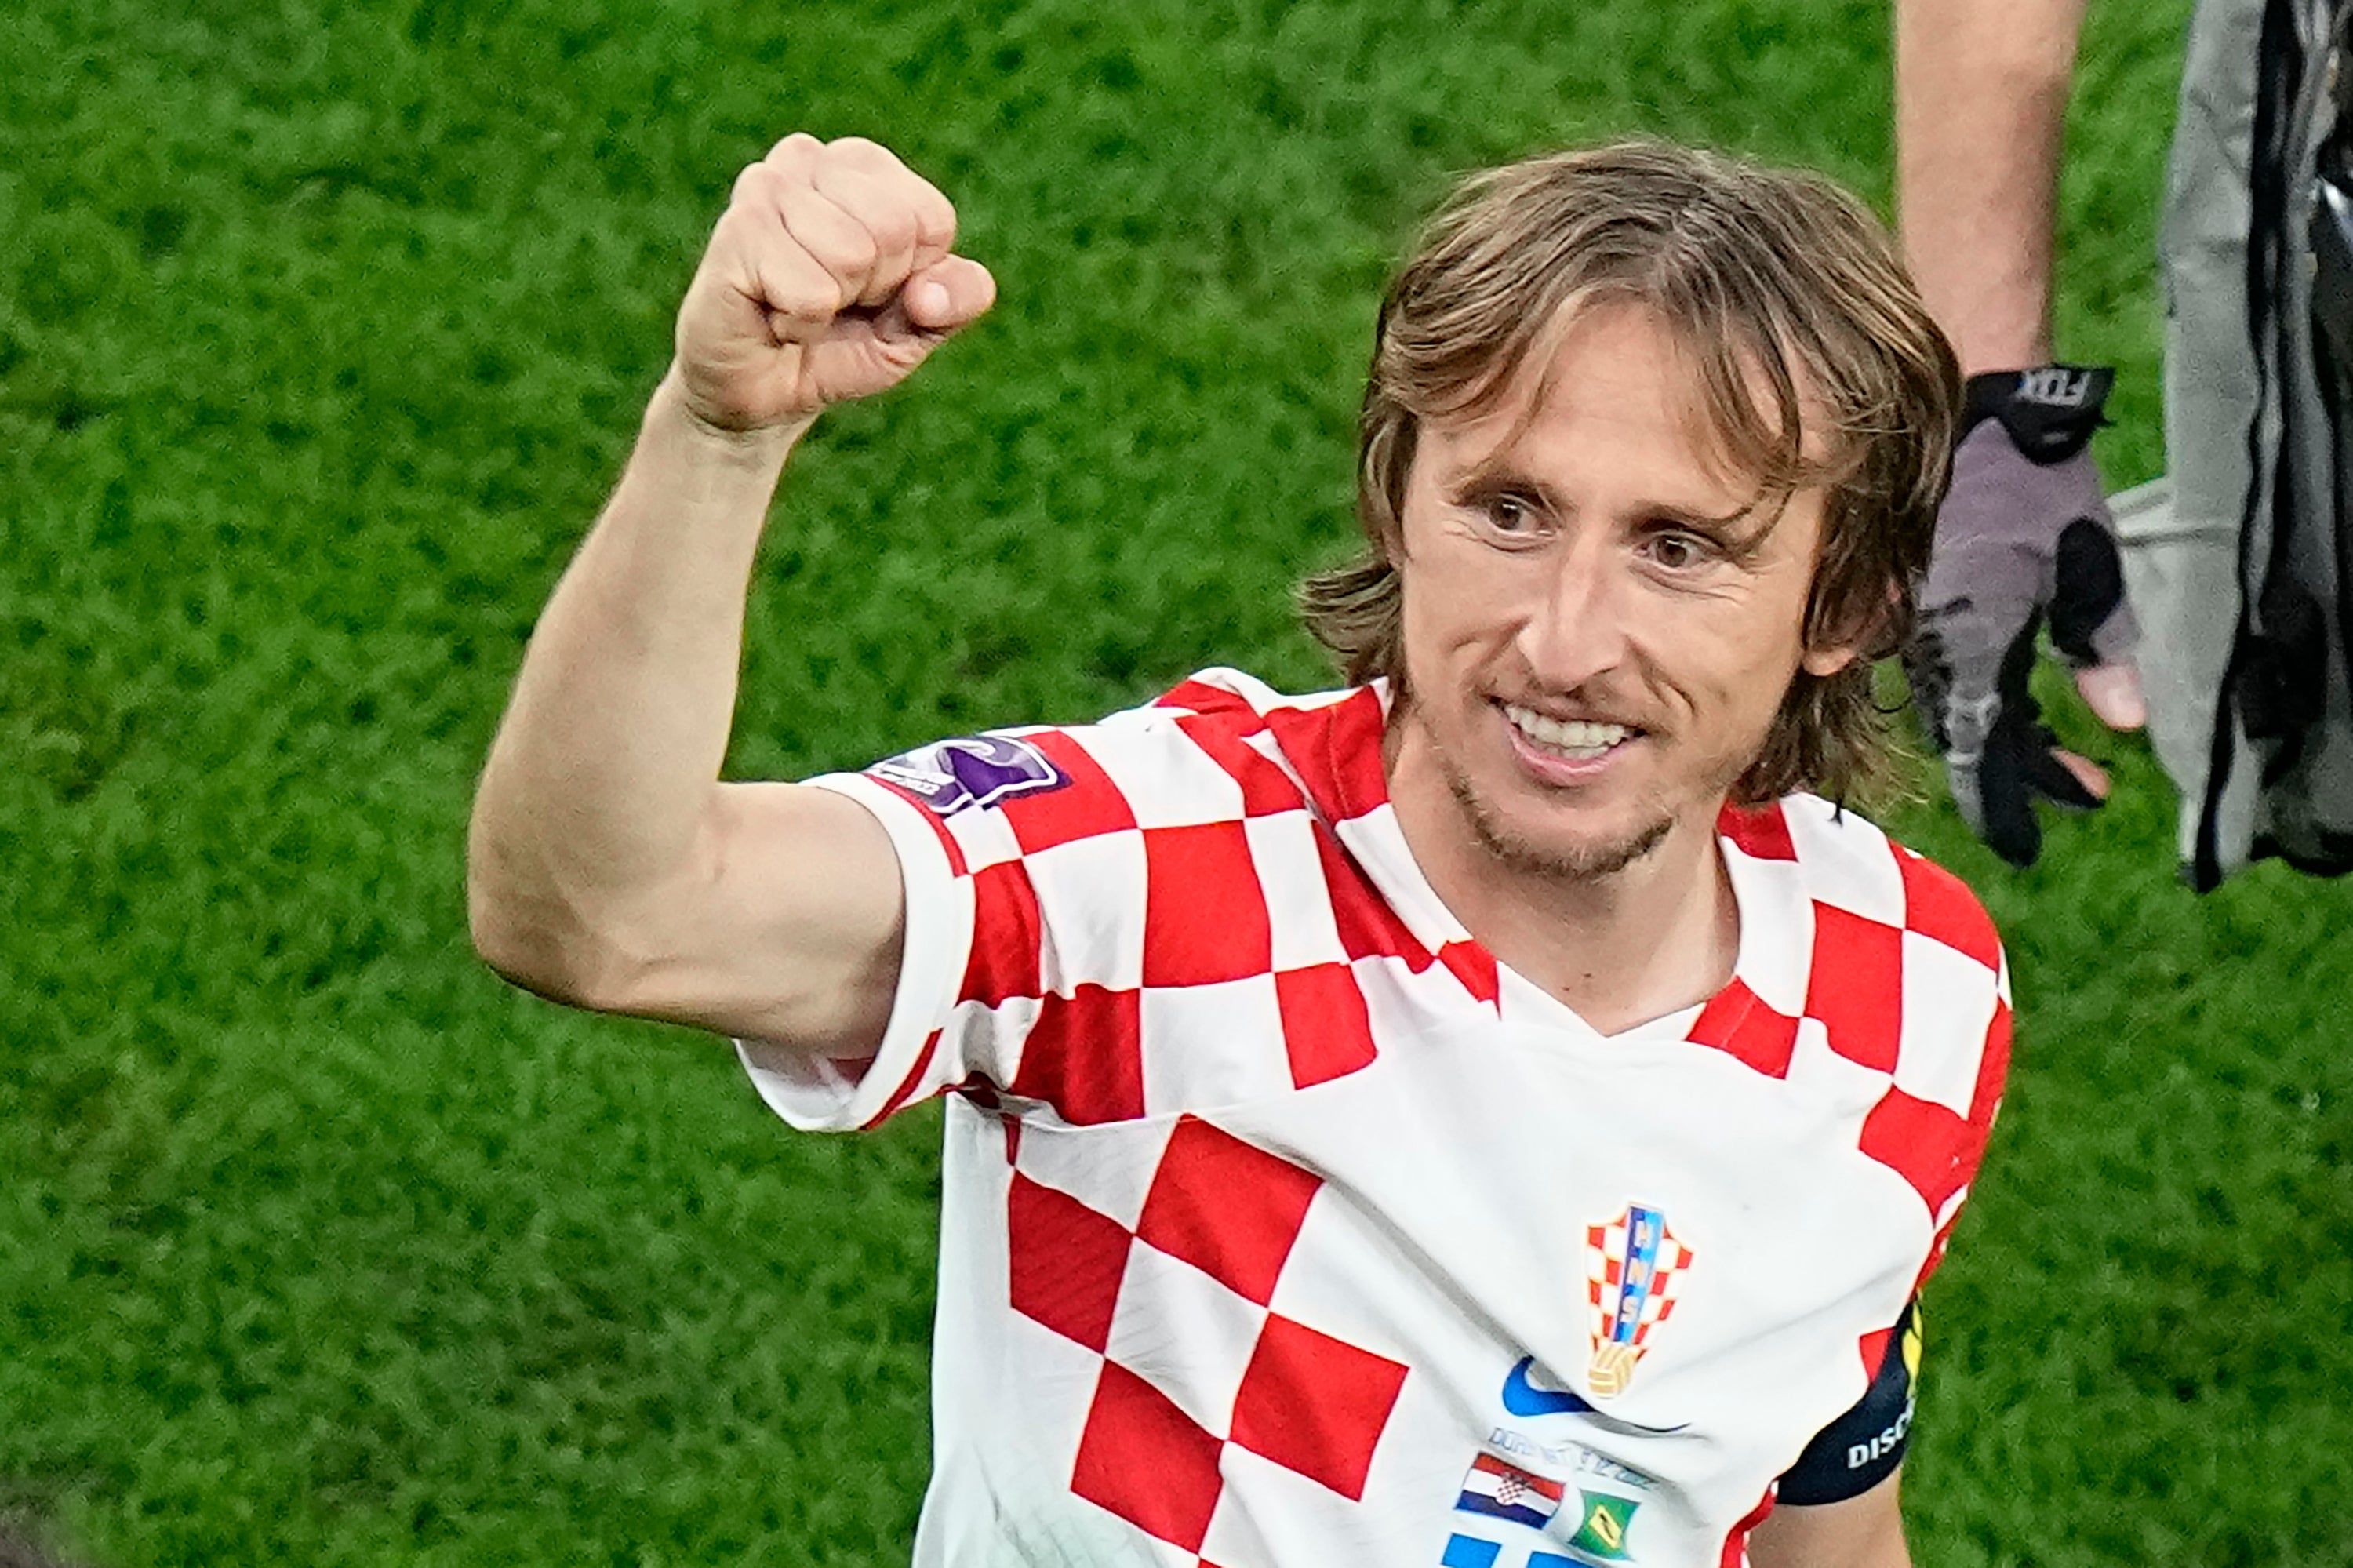 Croatia’s key player is Luka Modric